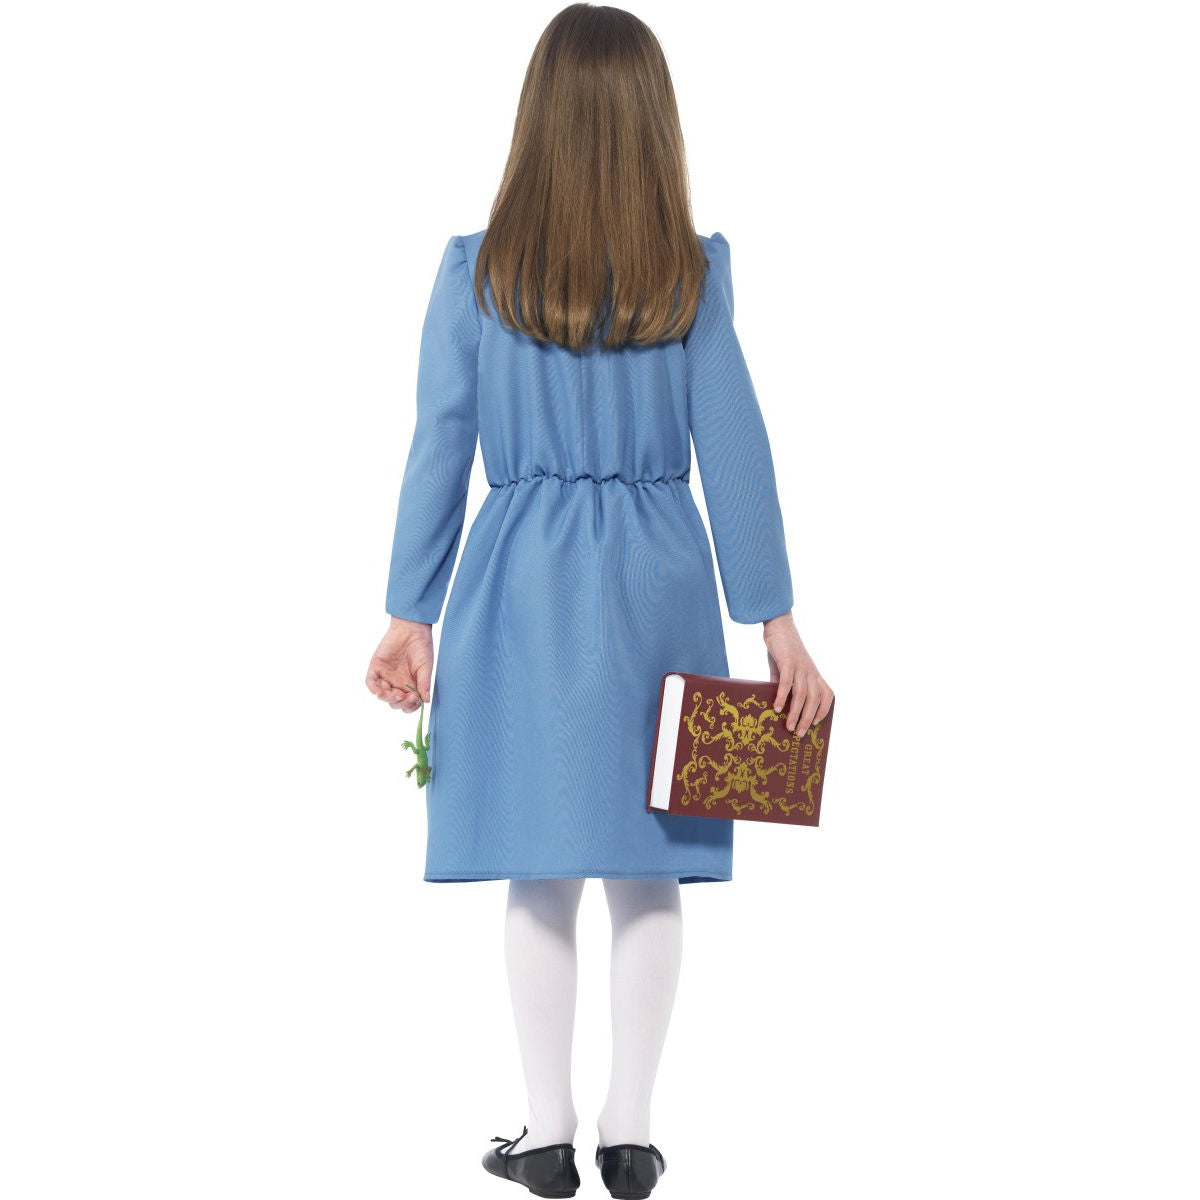 Roald Dahl Matilda Girls Book Week Costume with Newt & Book